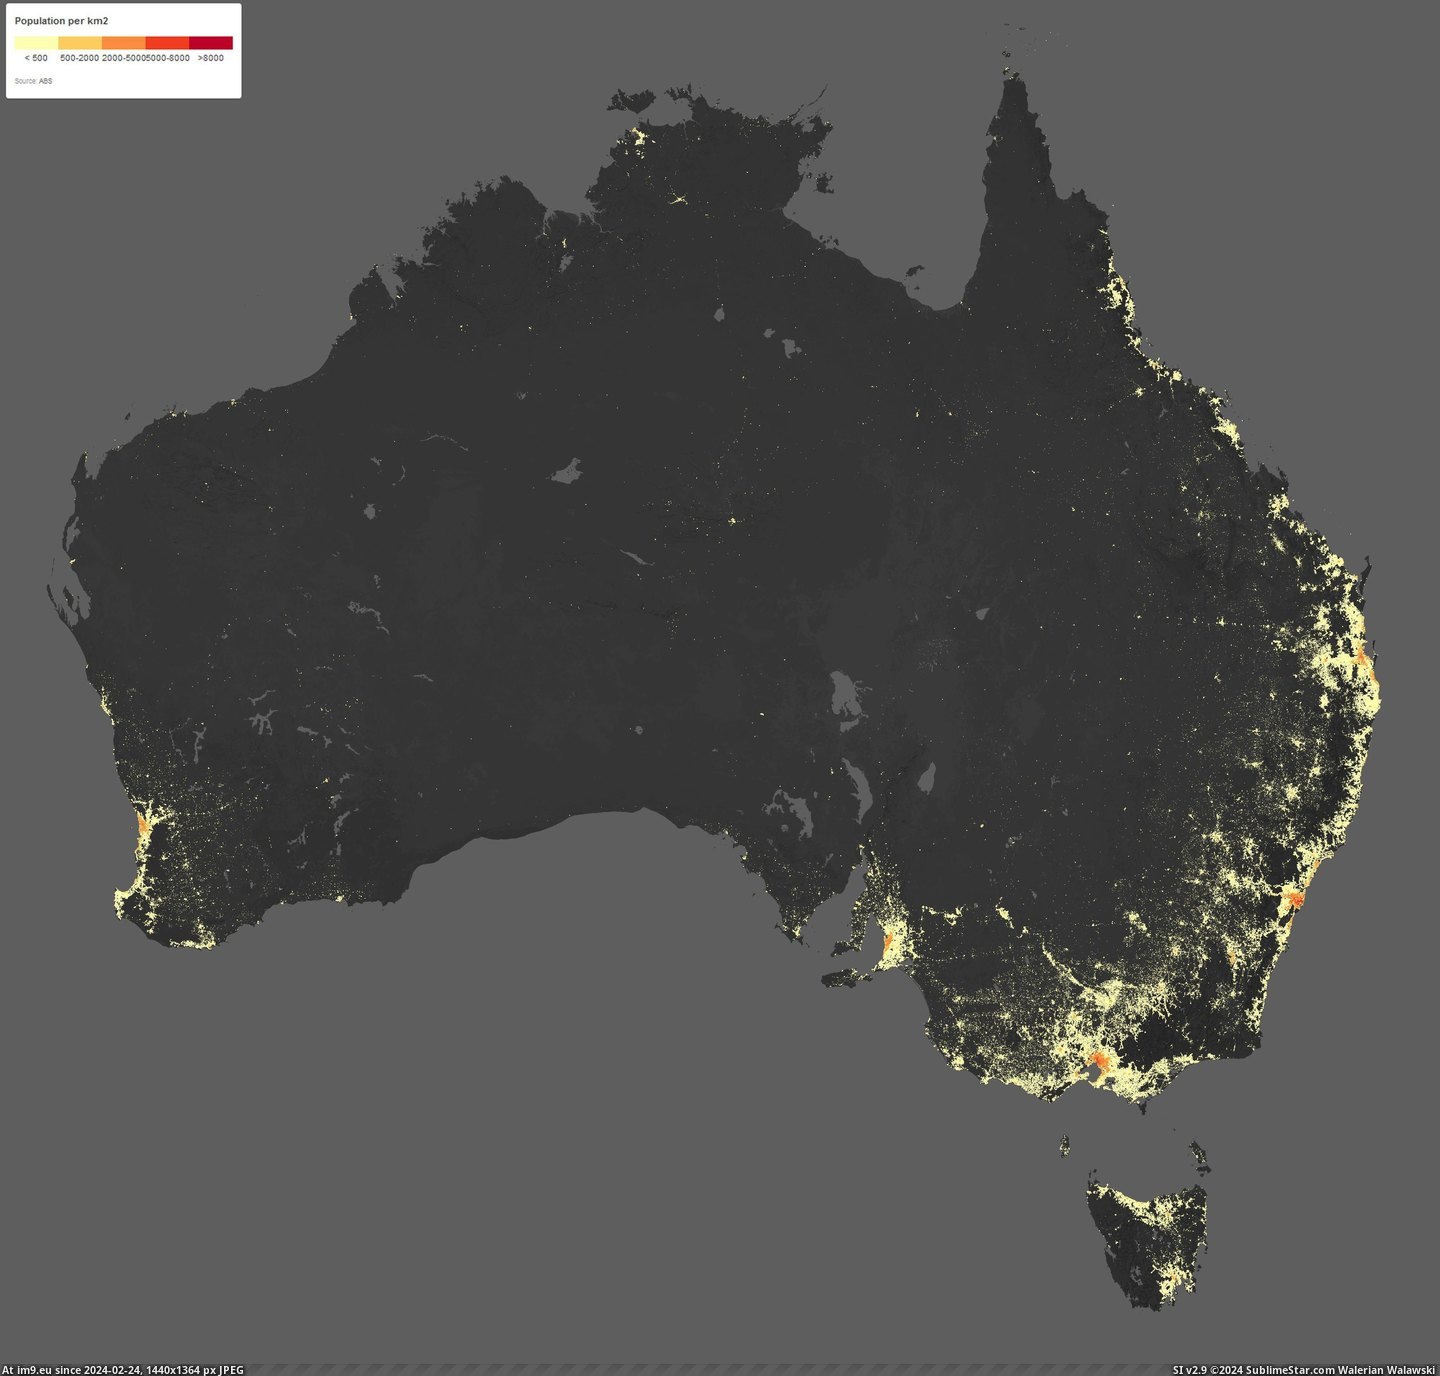 #Population #Density #Australia [Mapporn] Australia's Population Density [4000x3800] Pic. (Изображение из альбом My r/MAPS favs))